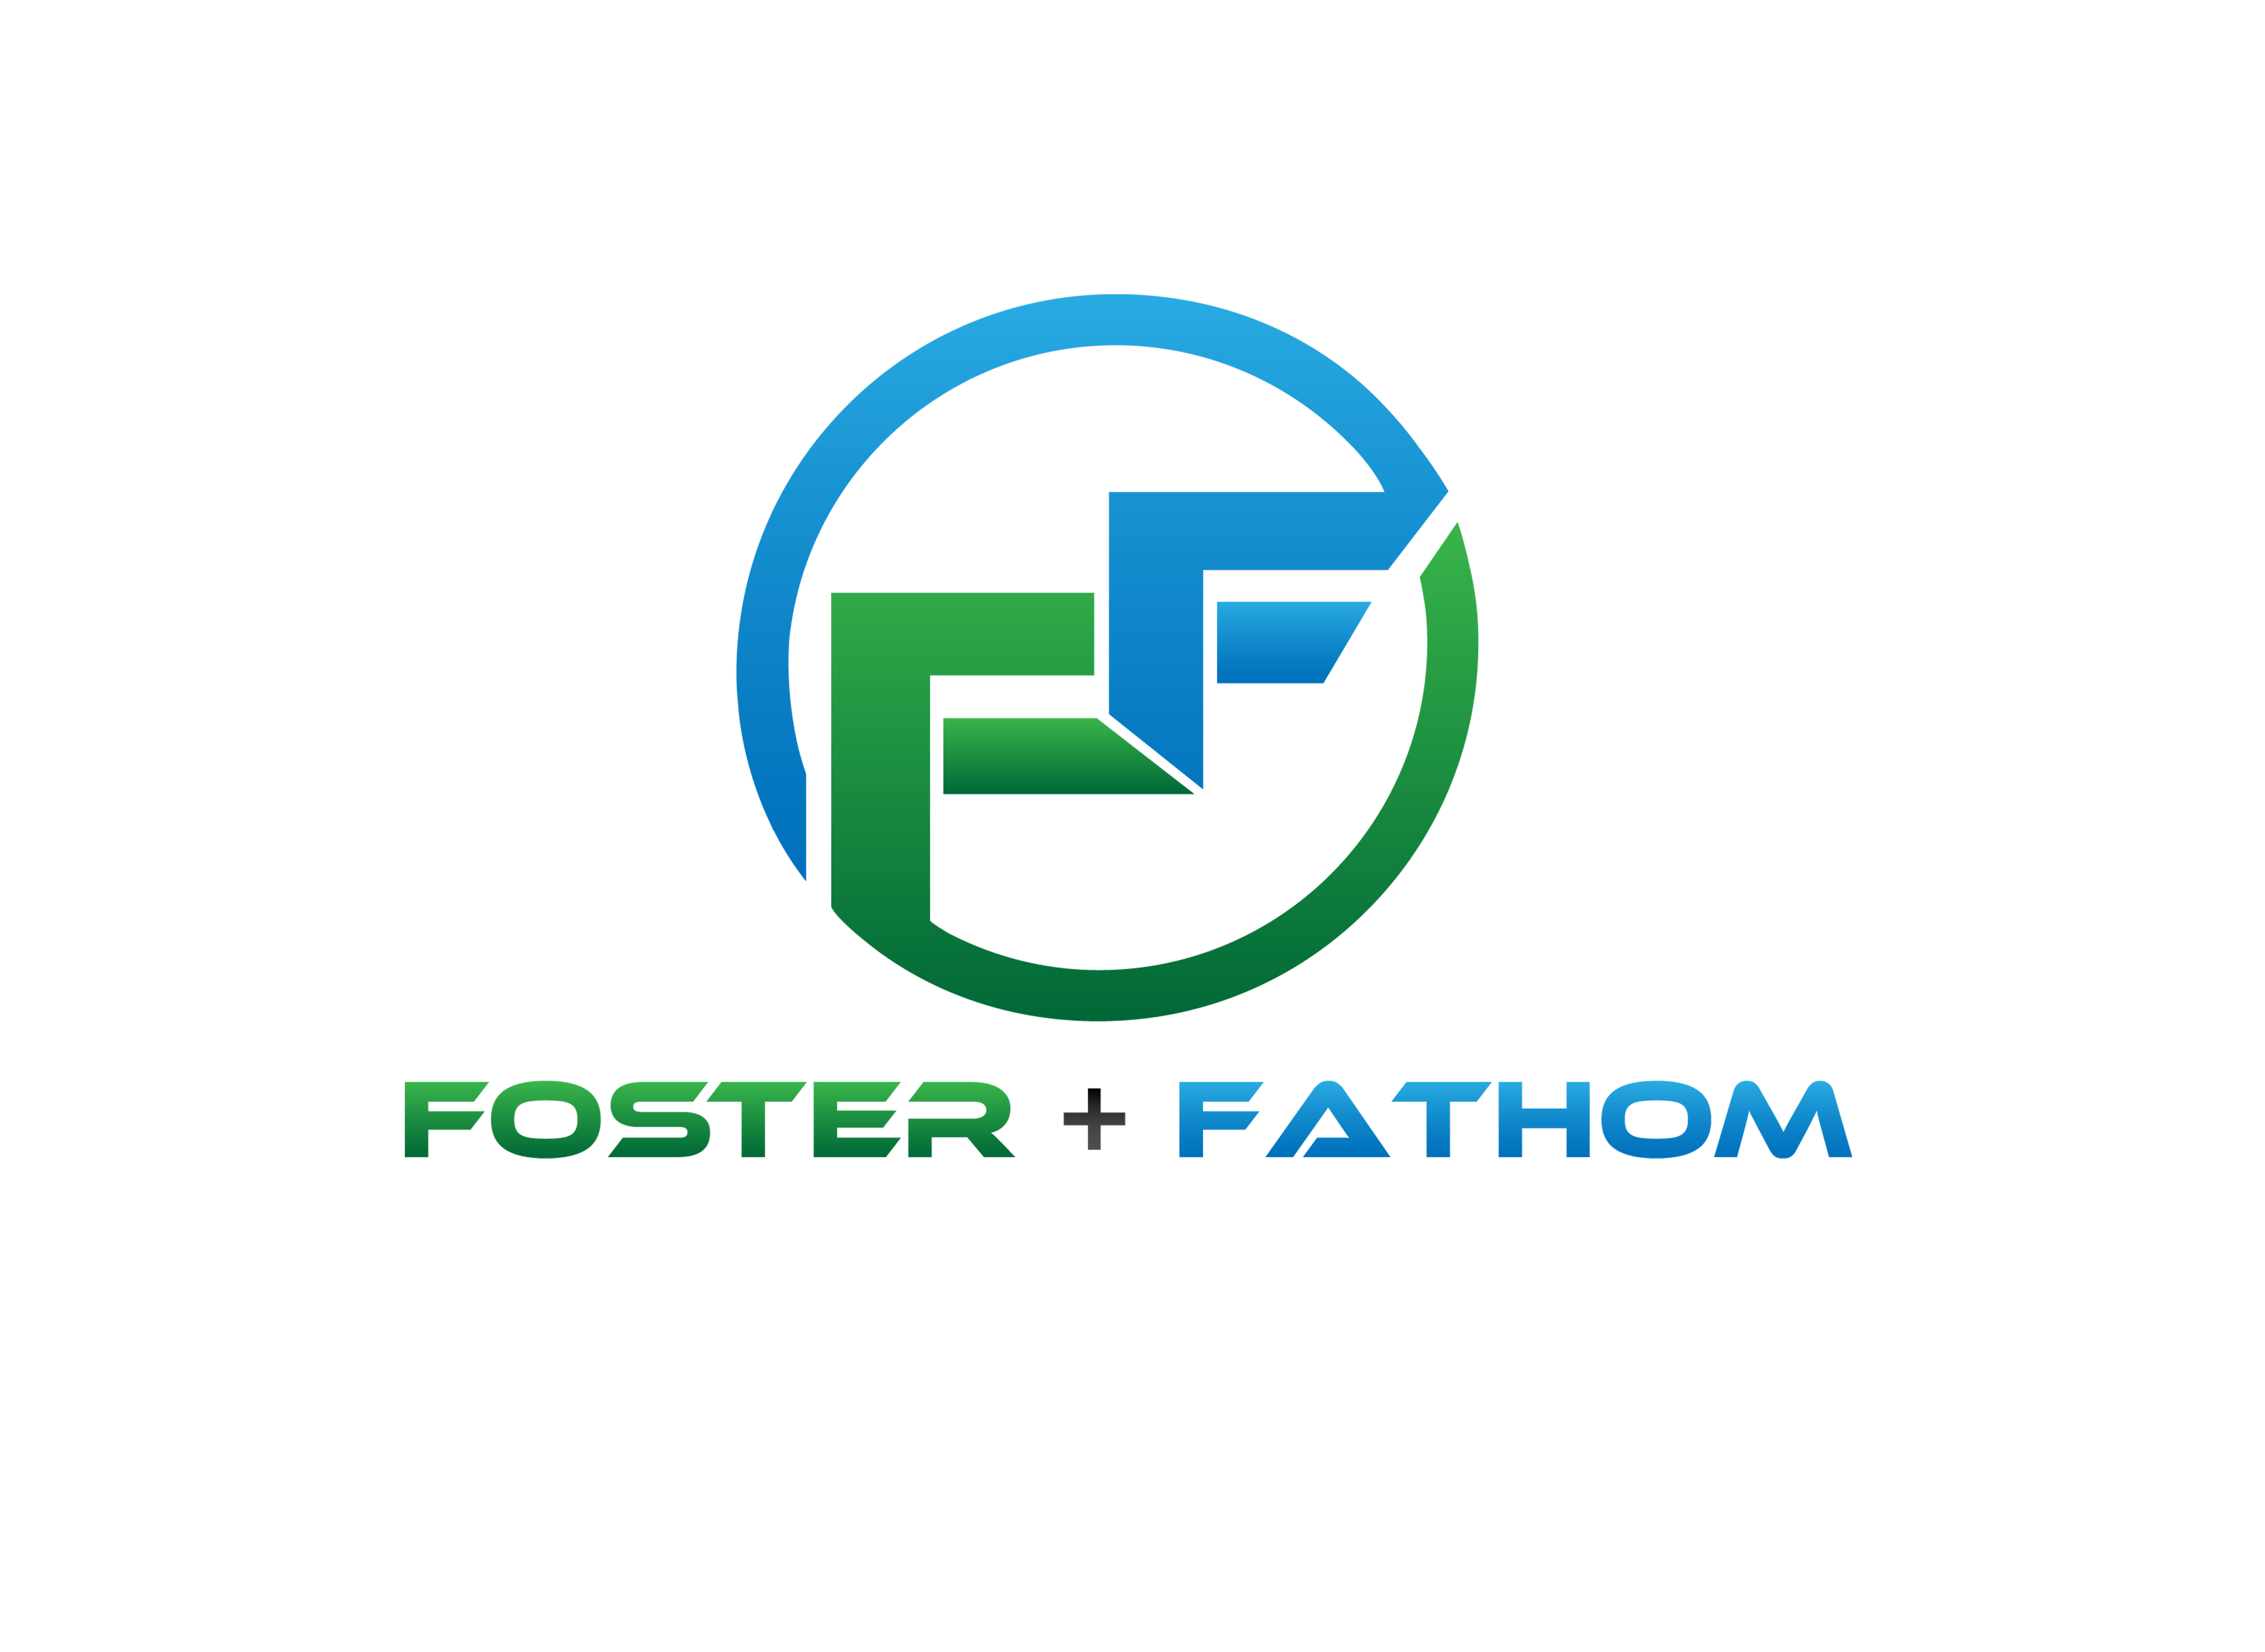 Foster&Fathom use this logo